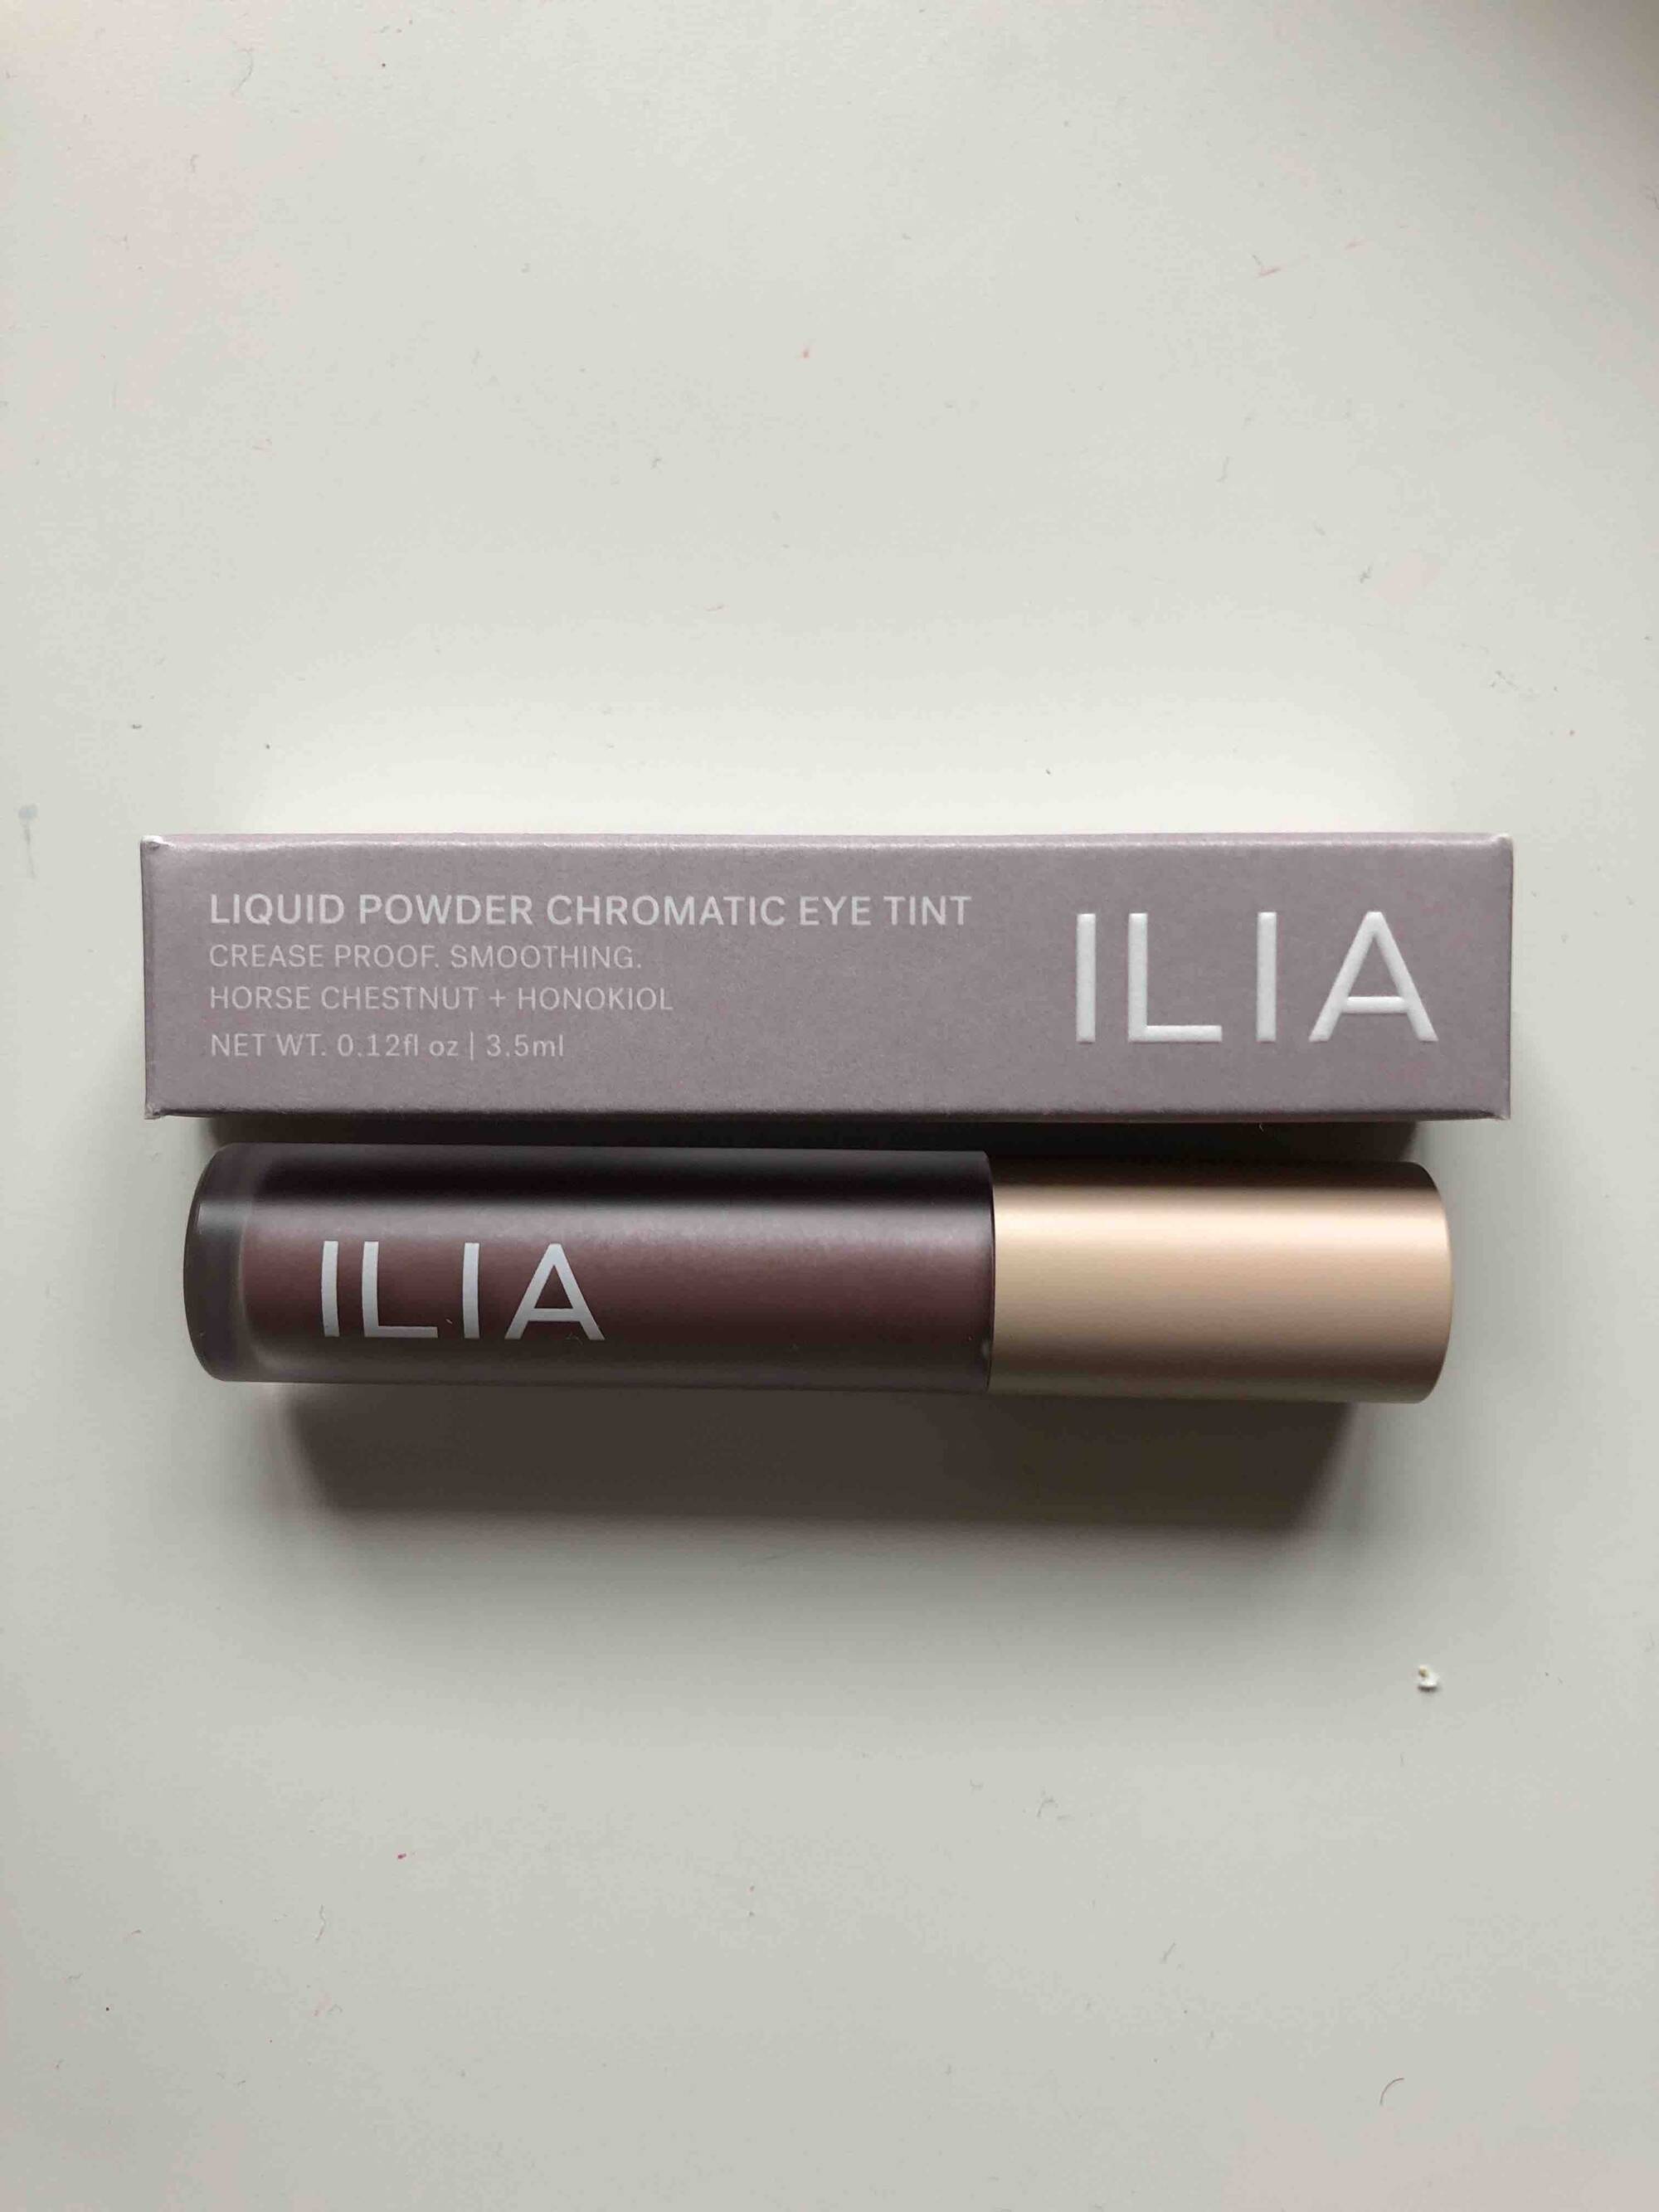 ILIA - Liquid powder chromatic eye tint